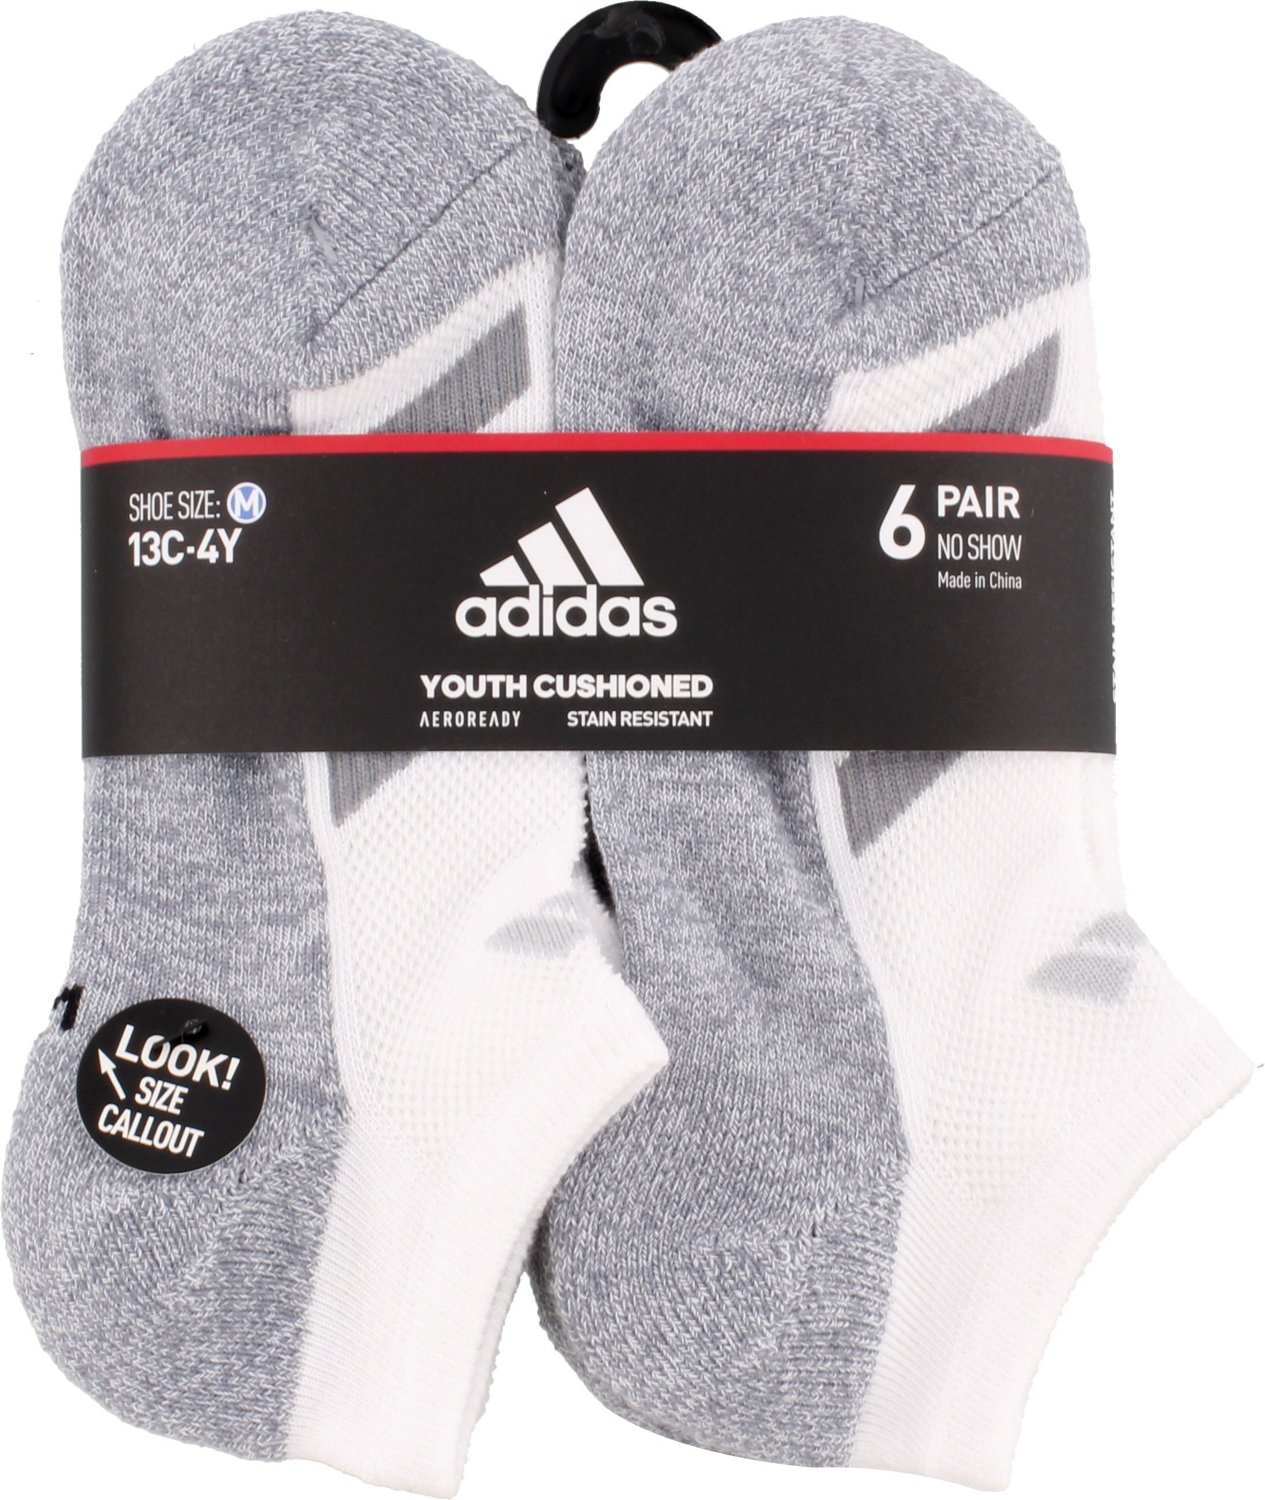 adidas Youth Cushioned Angle Stripe No Show Socks 6 Pack | Academy